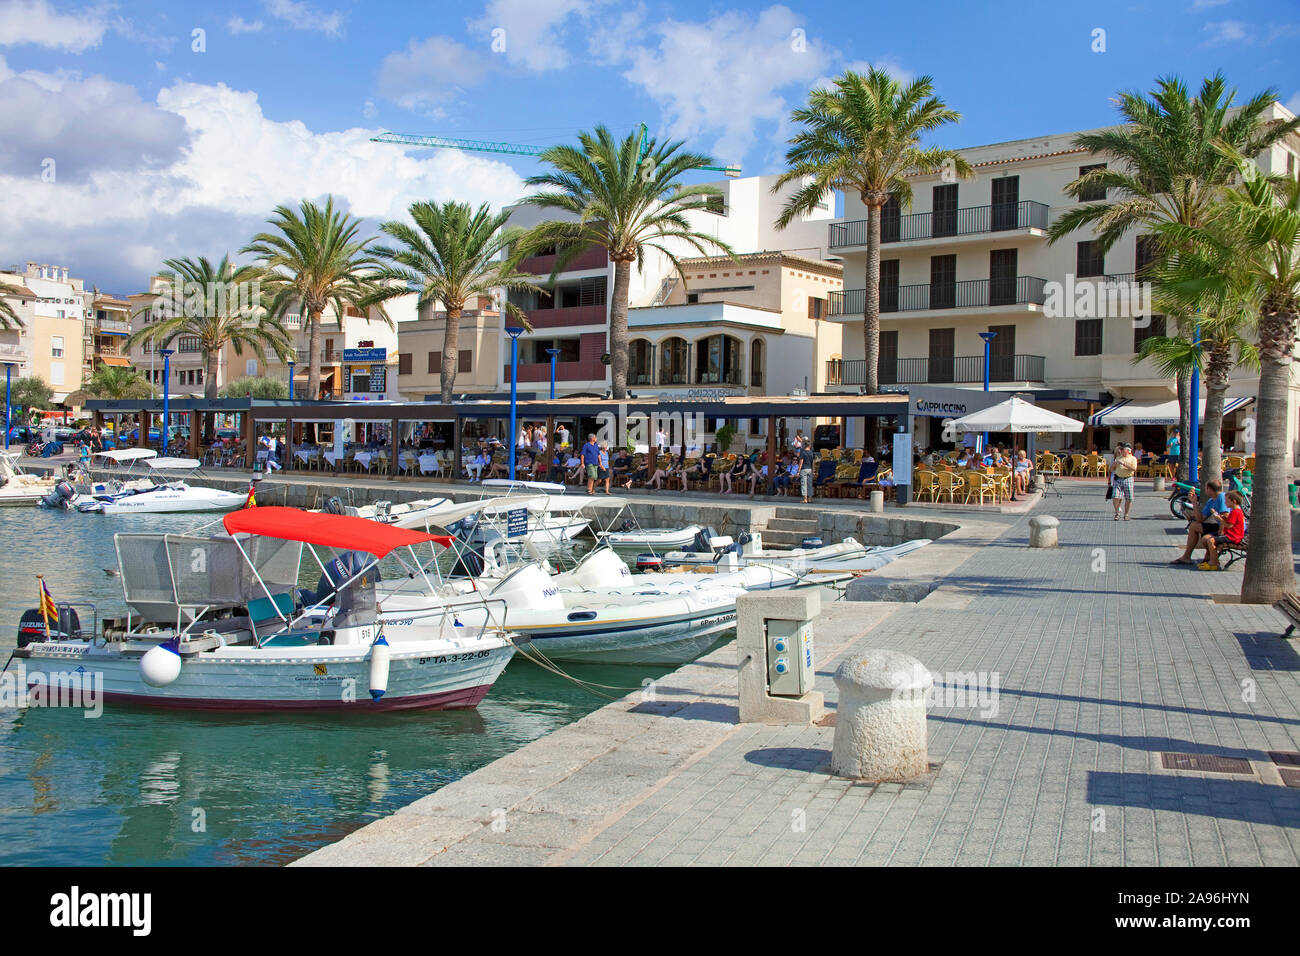 Promenade du port et de la jetée du port d'Andtratx, Andratx, Mallorca, Baleares, Espagne Banque D'Images